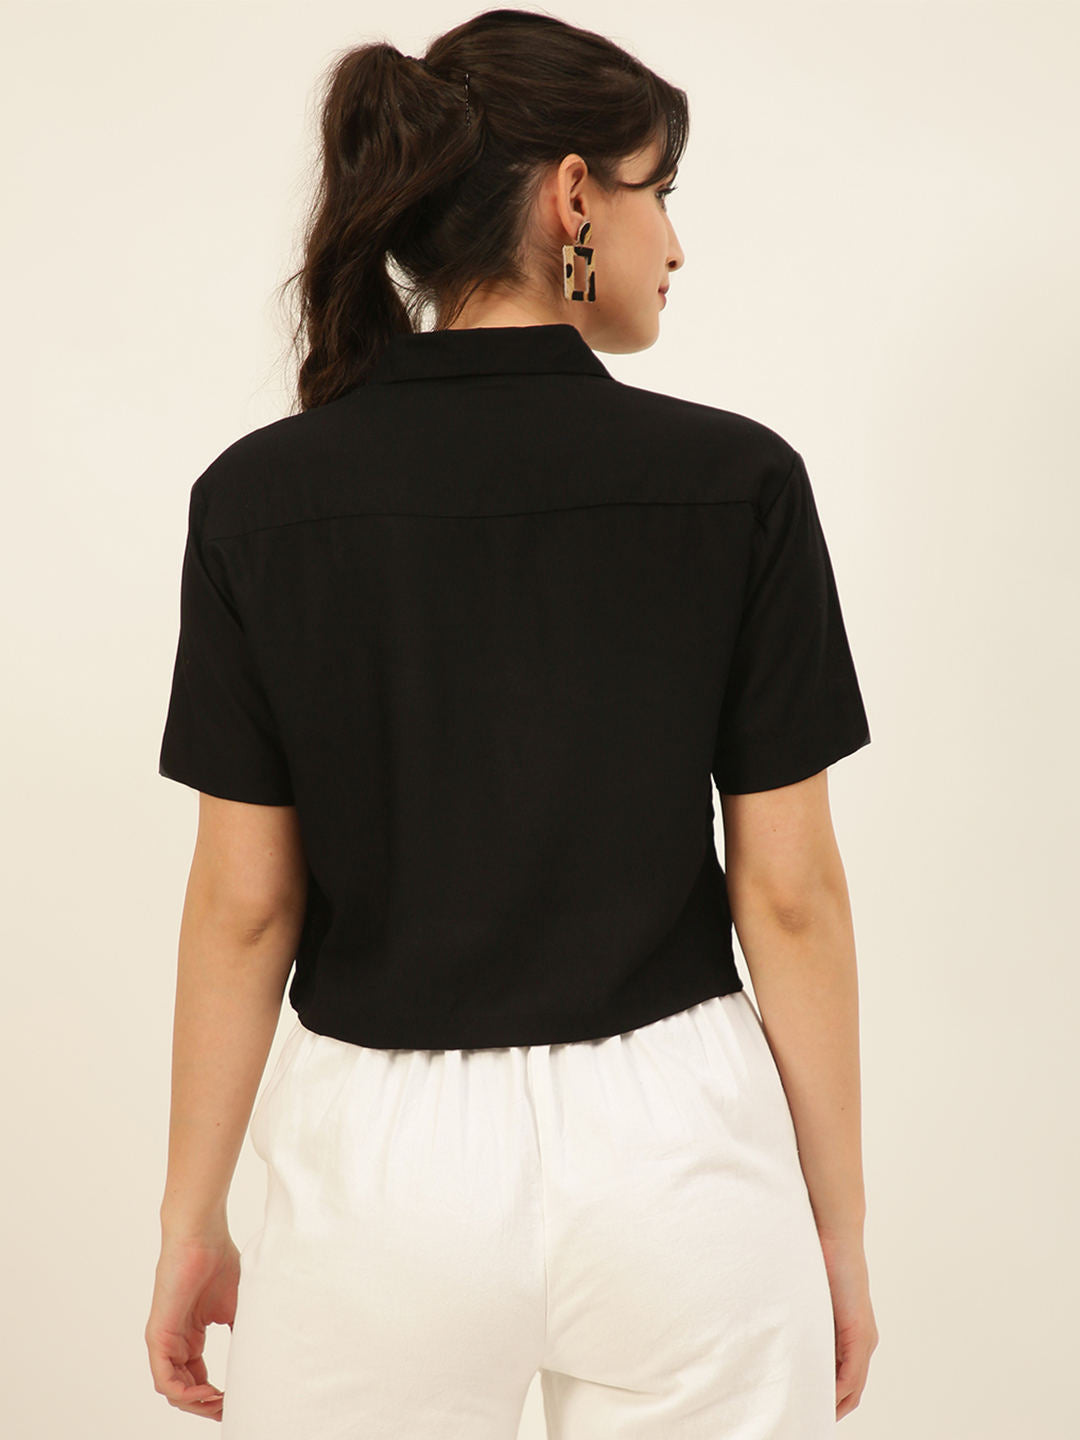 Premium Solid Black Rayon Crop Shirt